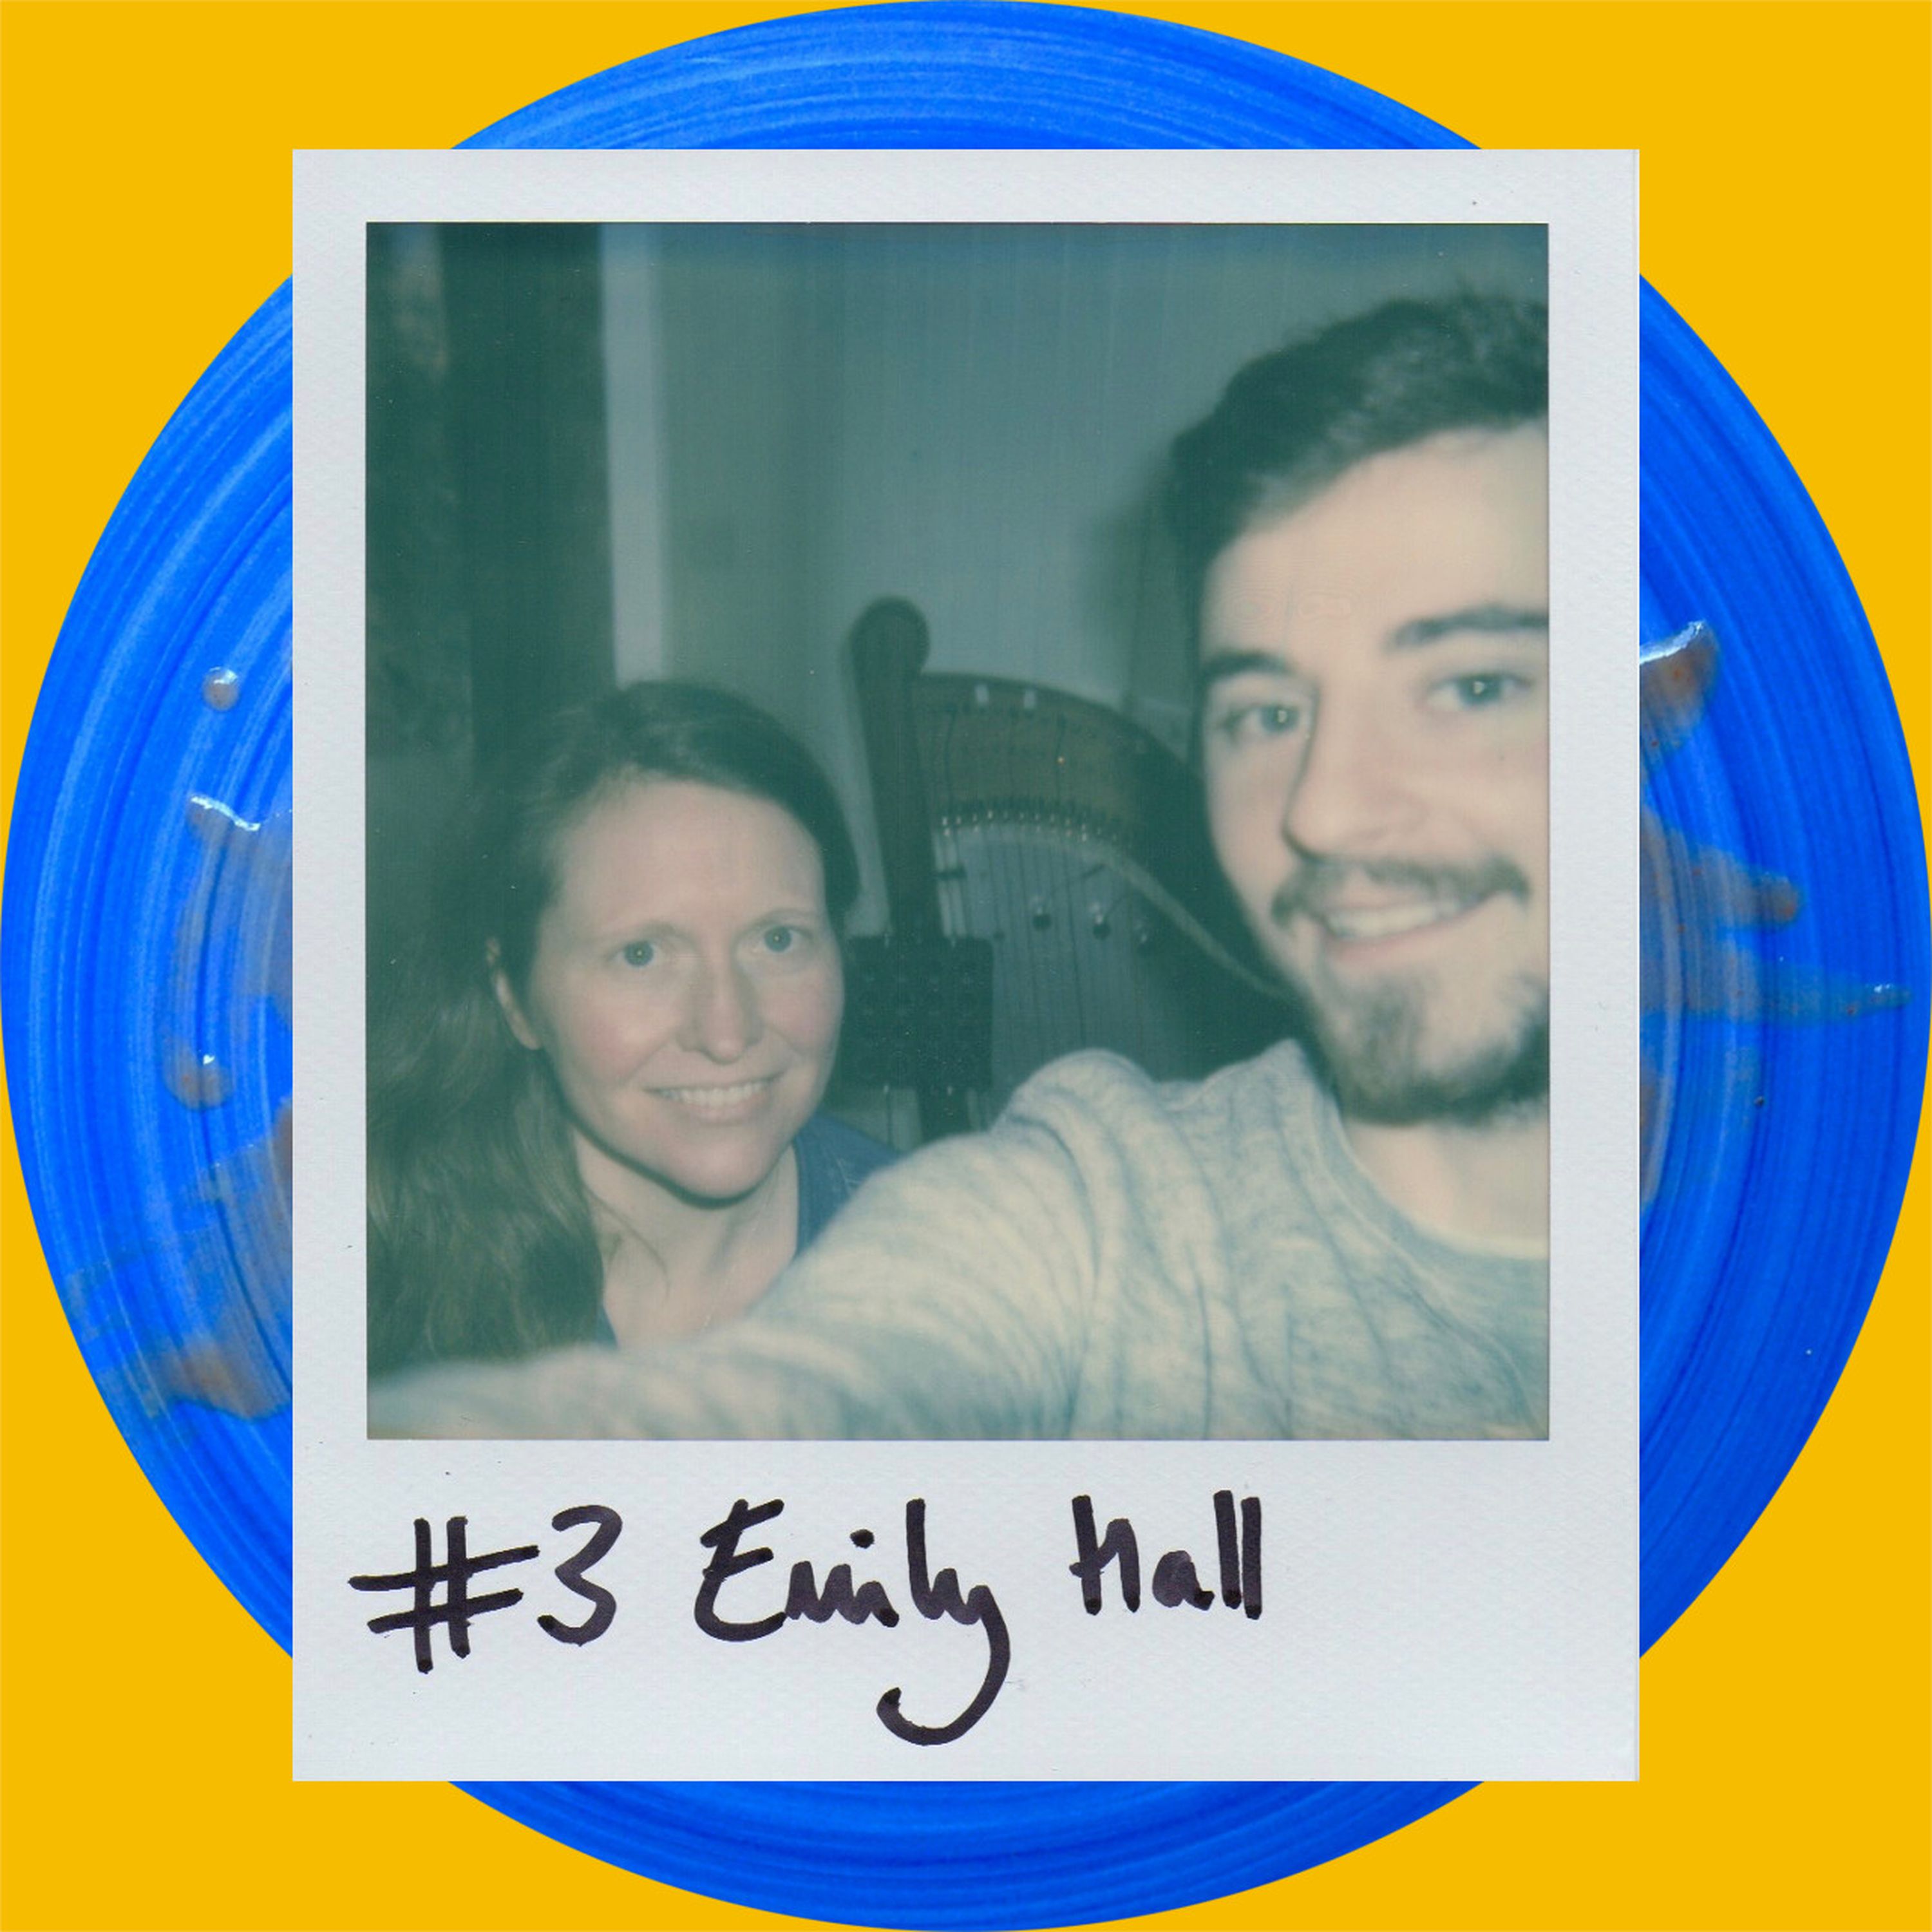 #3 Emily Hall